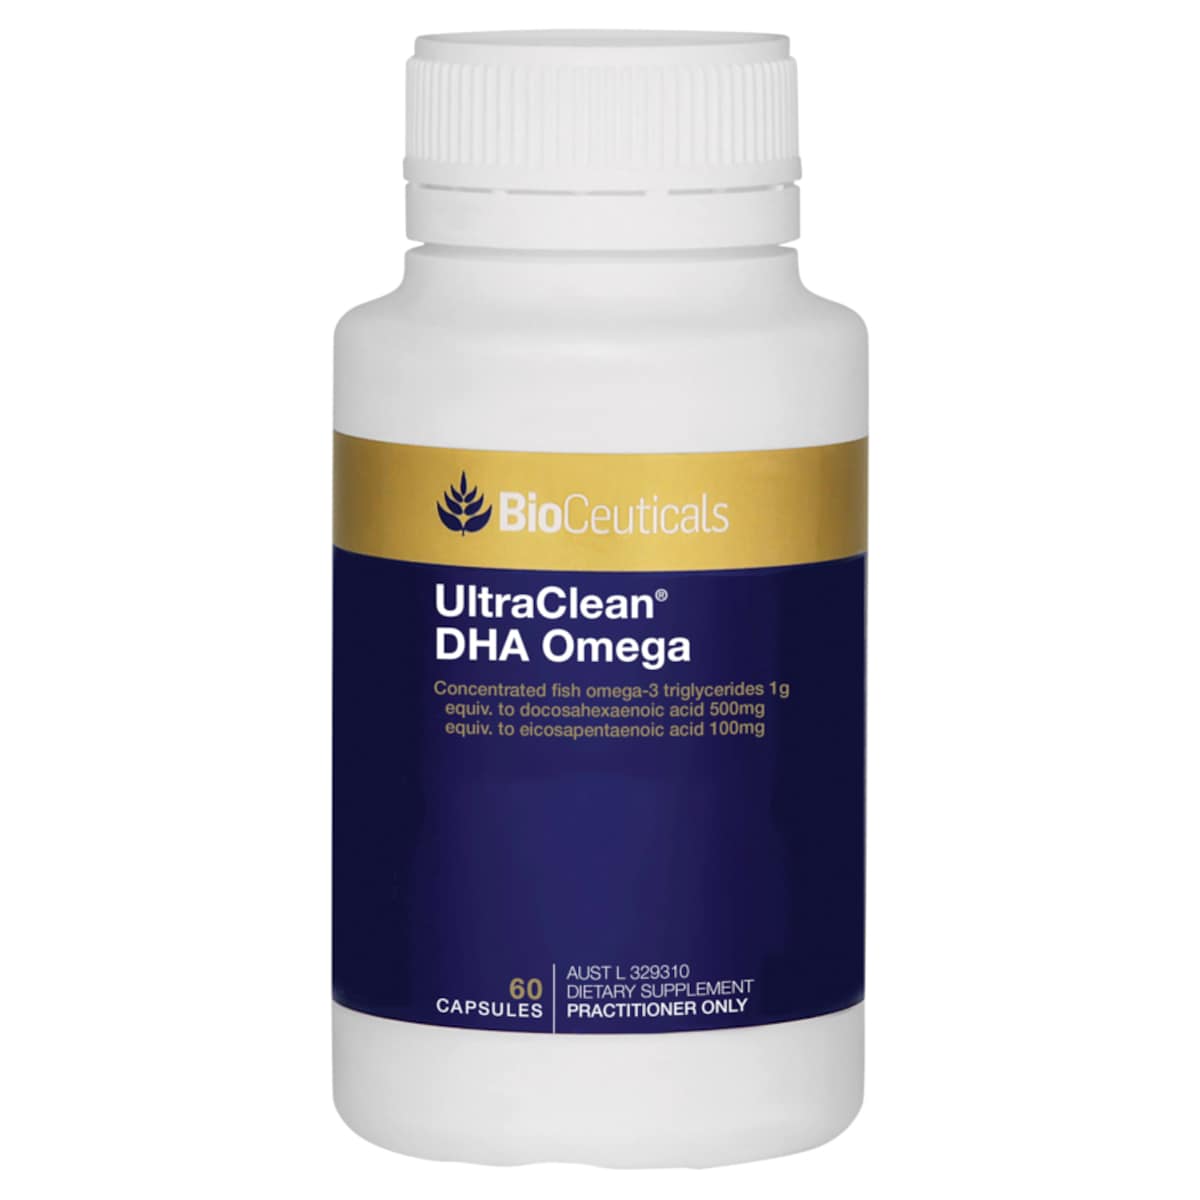 BioCeuticals UltraClean DHA Omega 60 Capsules Australia